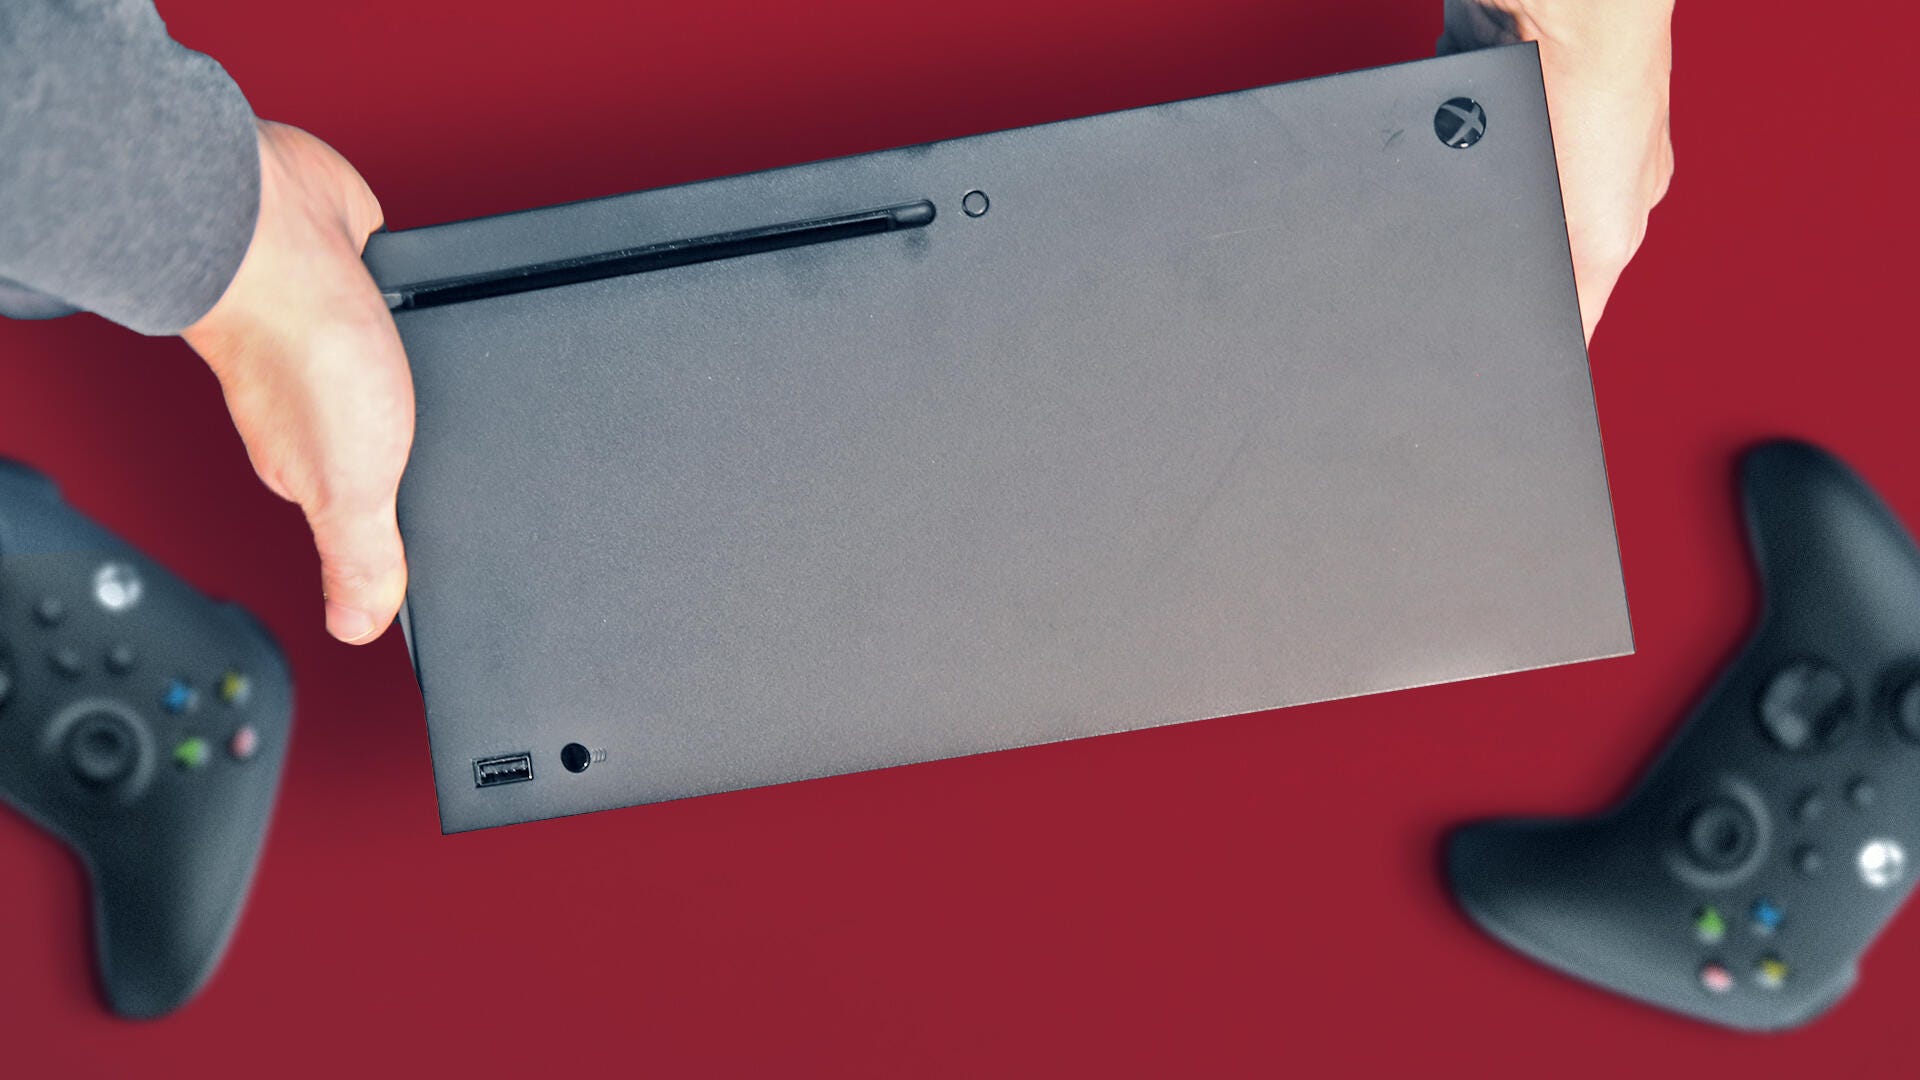 Microsoft reveals Stalker 2 trailer for Xbox Series X - Video - CNET